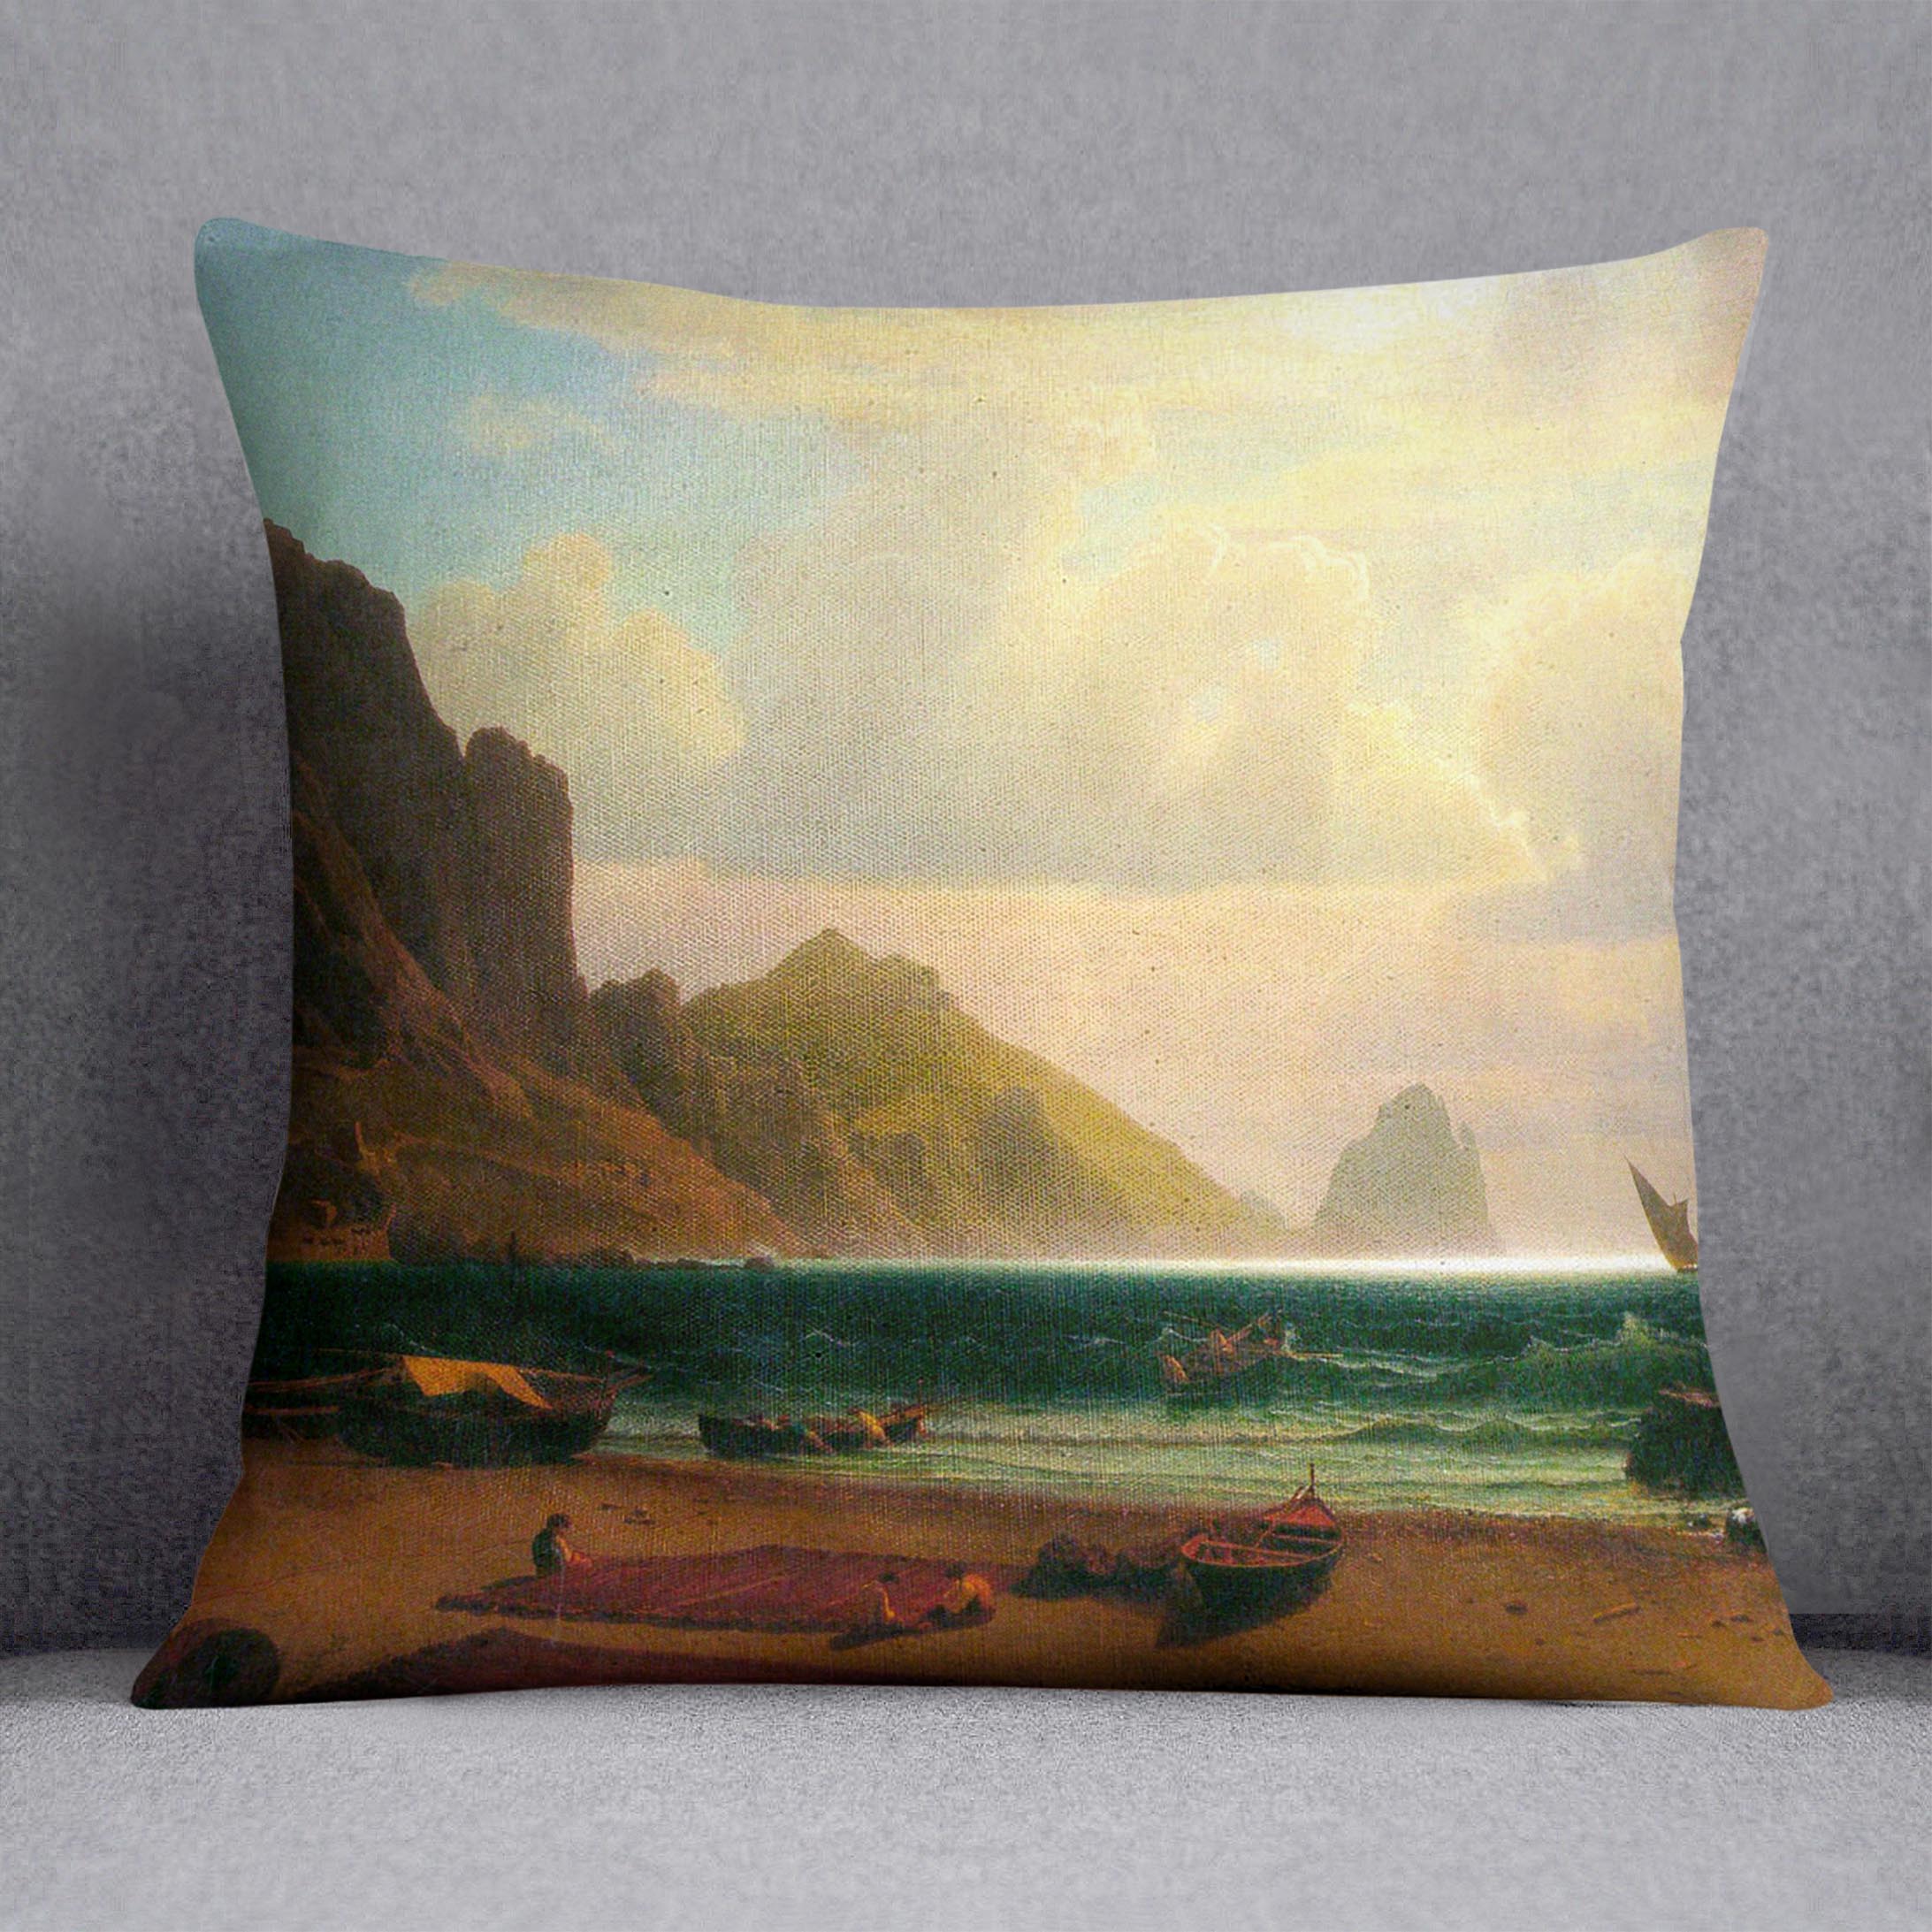 Marina Piccola Capri by Bierstadt Cushion - Canvas Art Rocks - 1